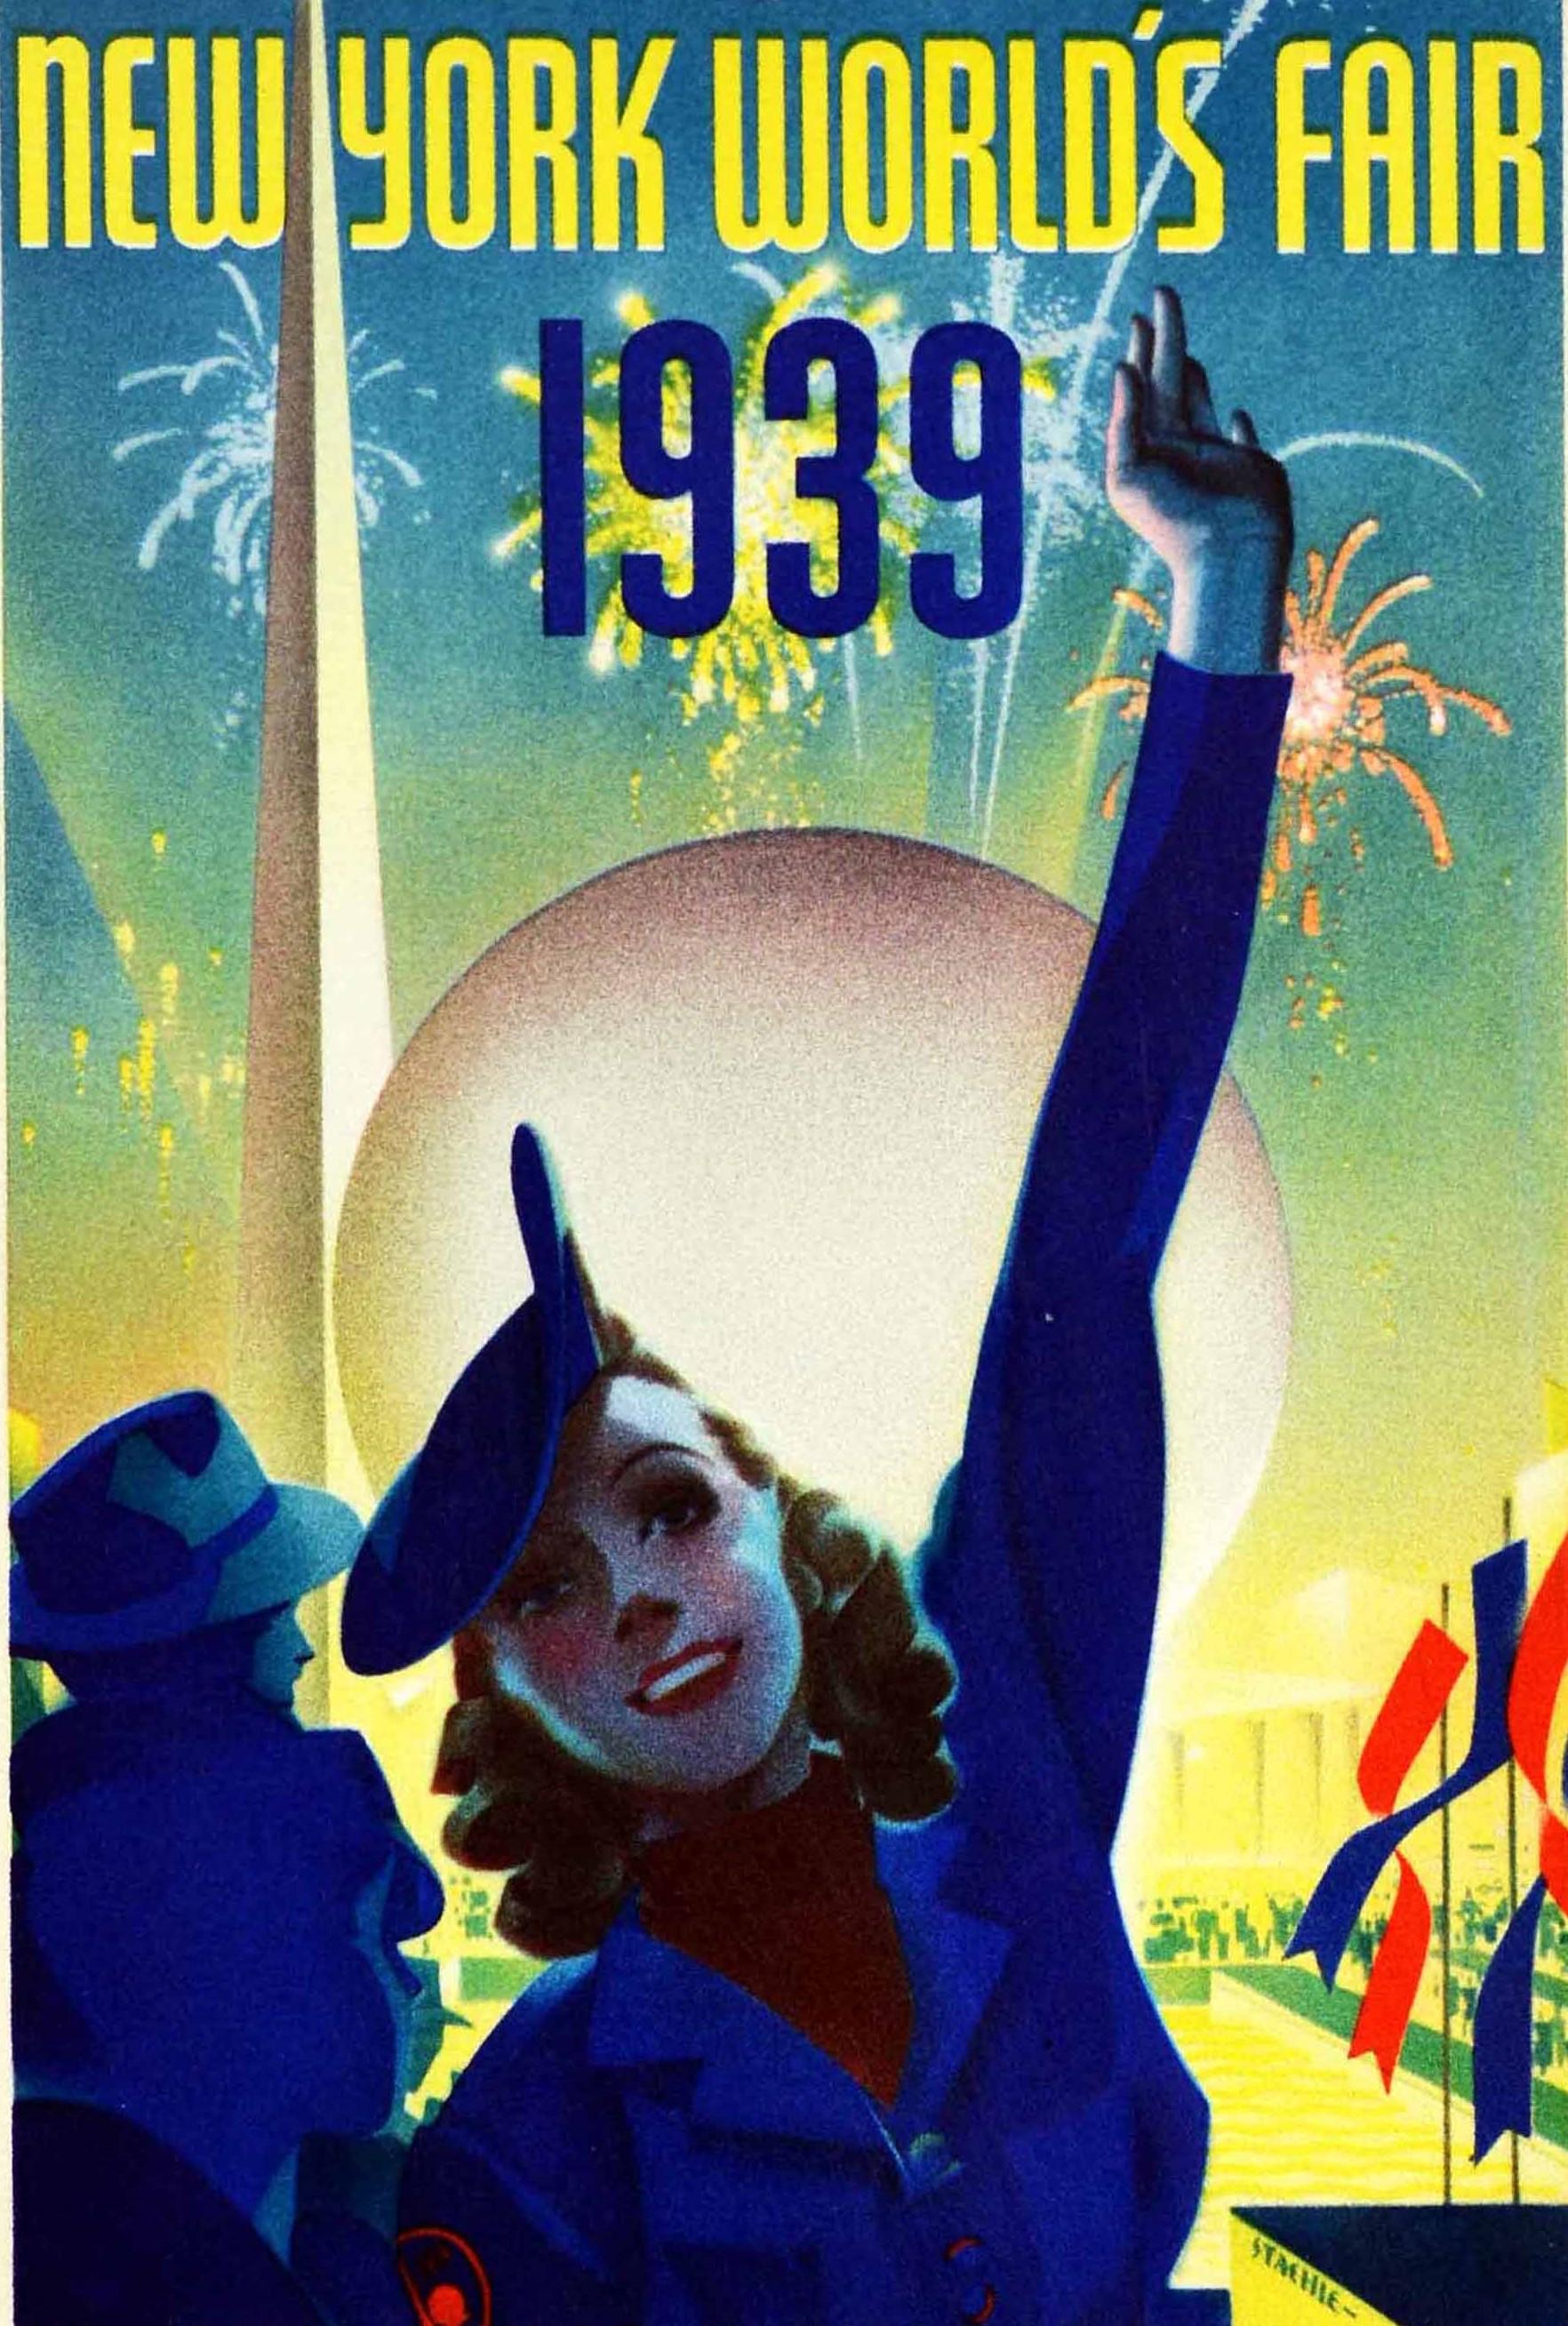 Original Vintage Poster New York World's Fair Modernist Trylon Perisphere Design - Art Deco Print by Albert Staehle